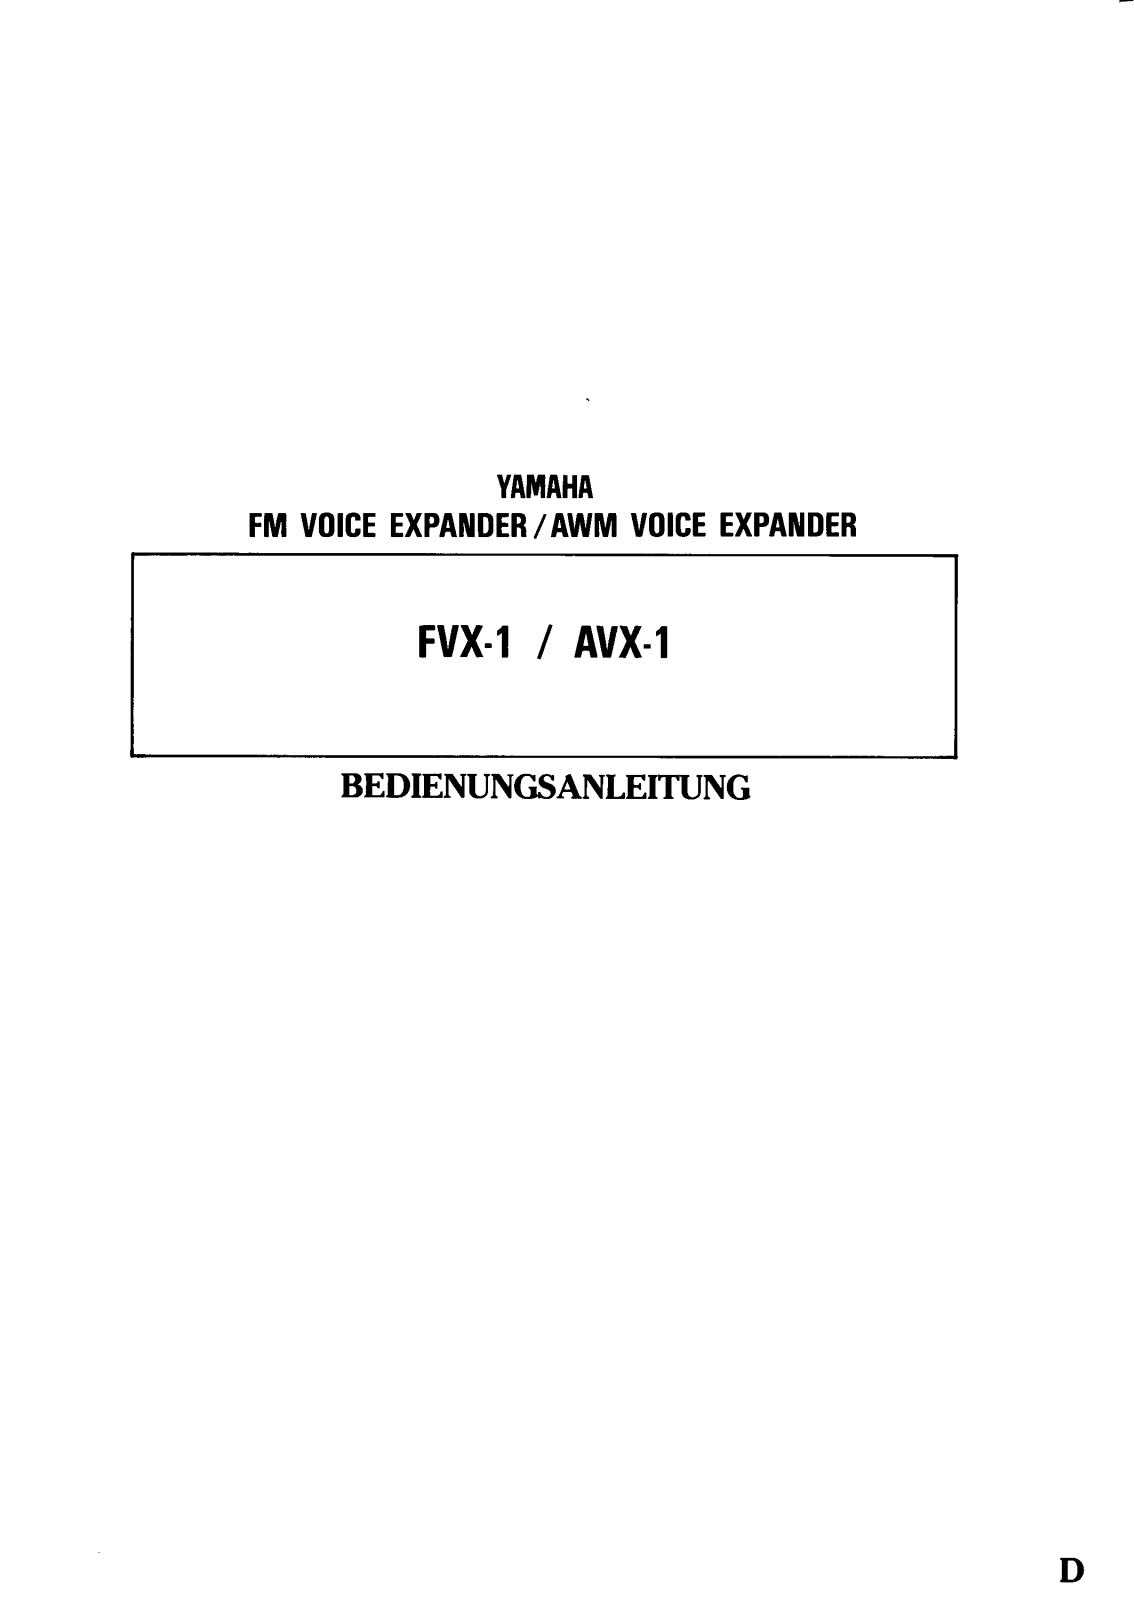 Yamaha FVX-1, AVX-1 User Manual